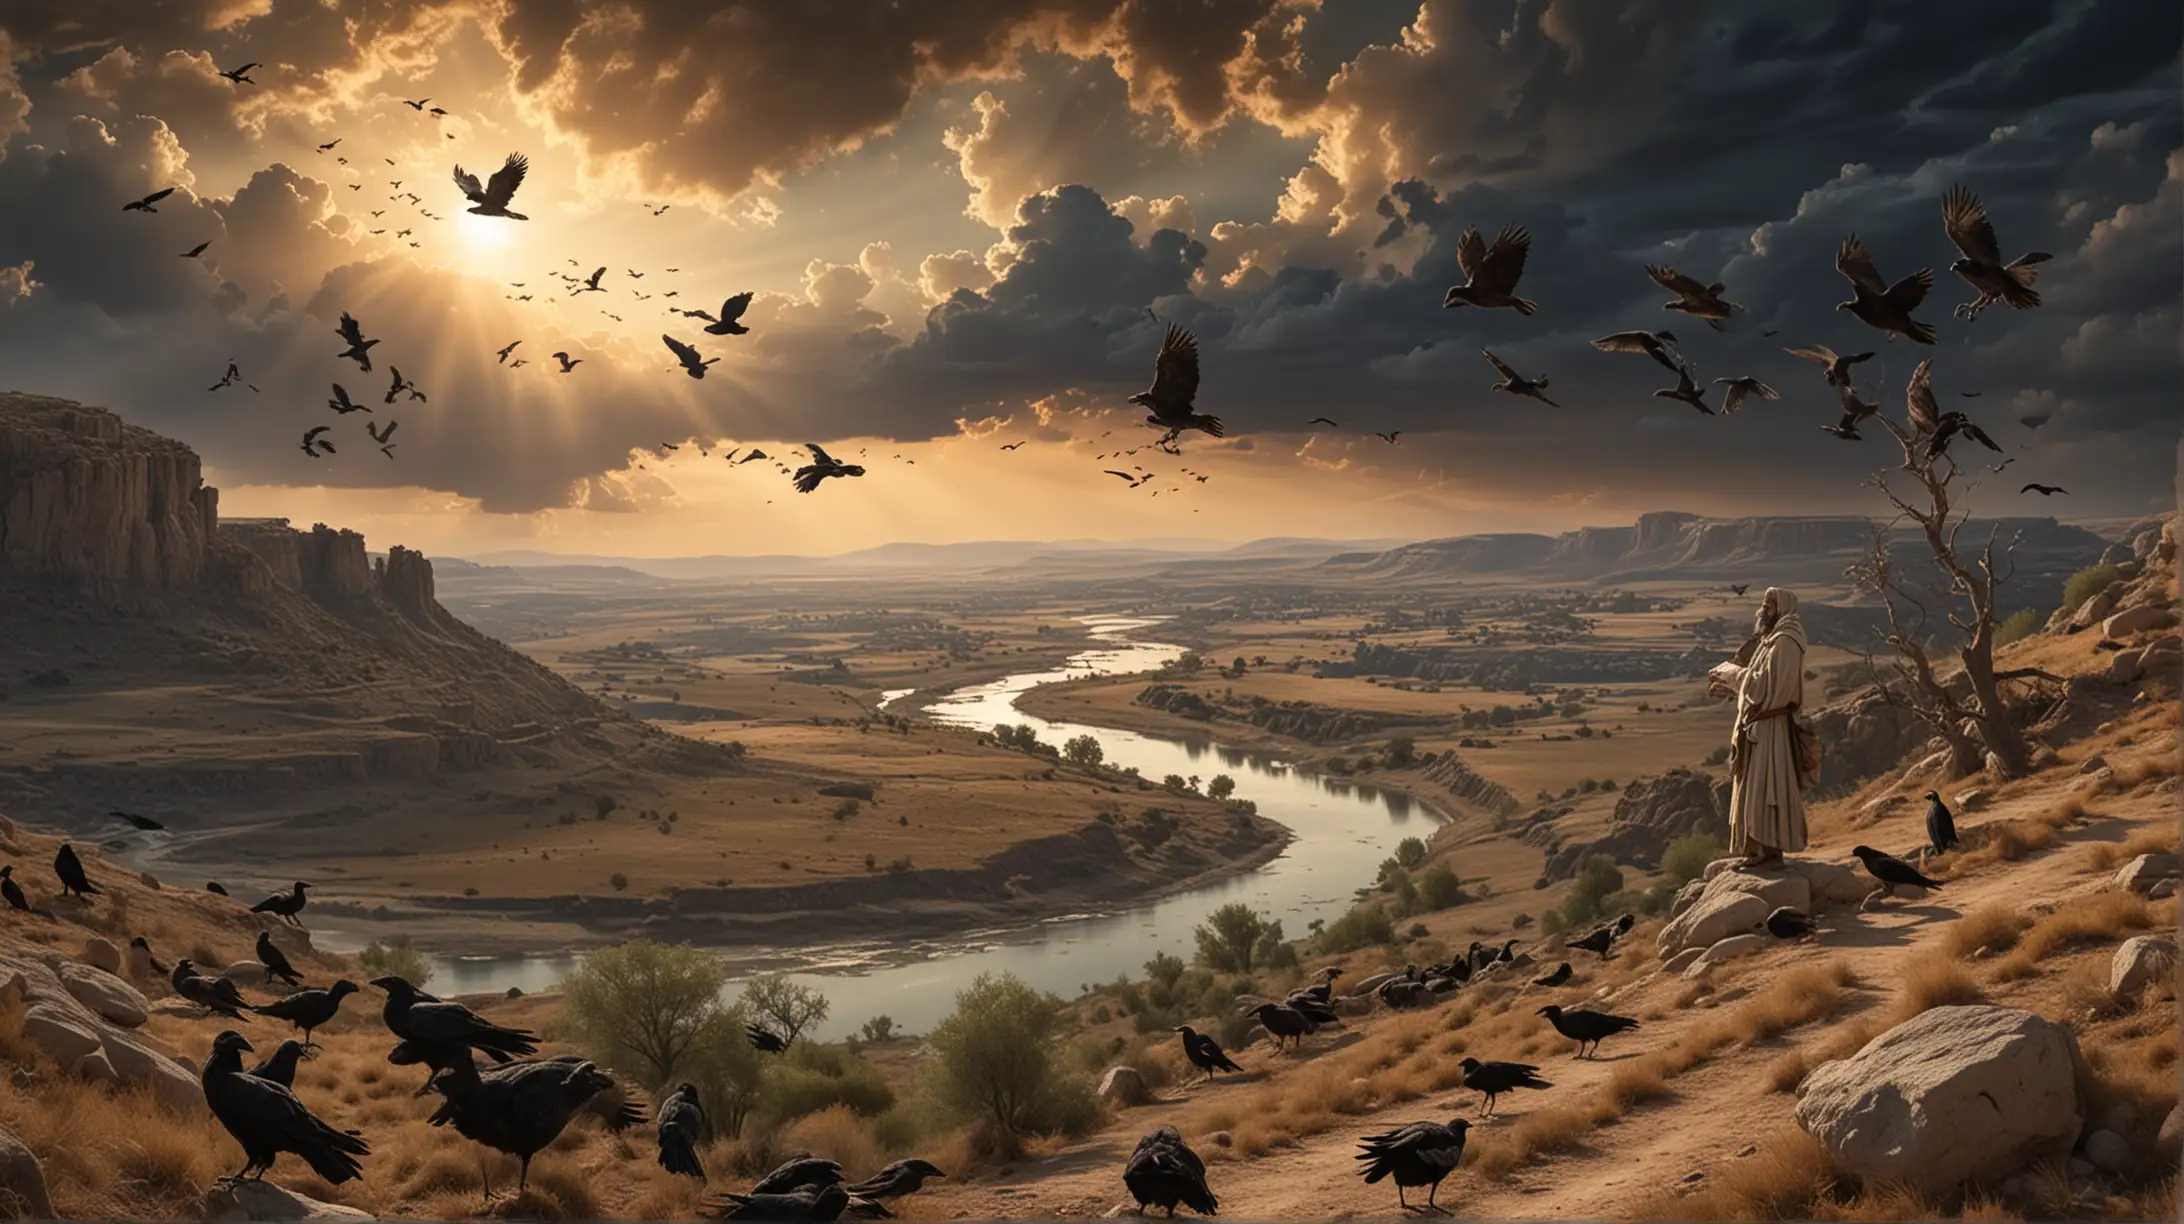 Biblical Prophet Elijah Standing on Majestic Hilltop under Vivid Sky with Ravens and Winding River